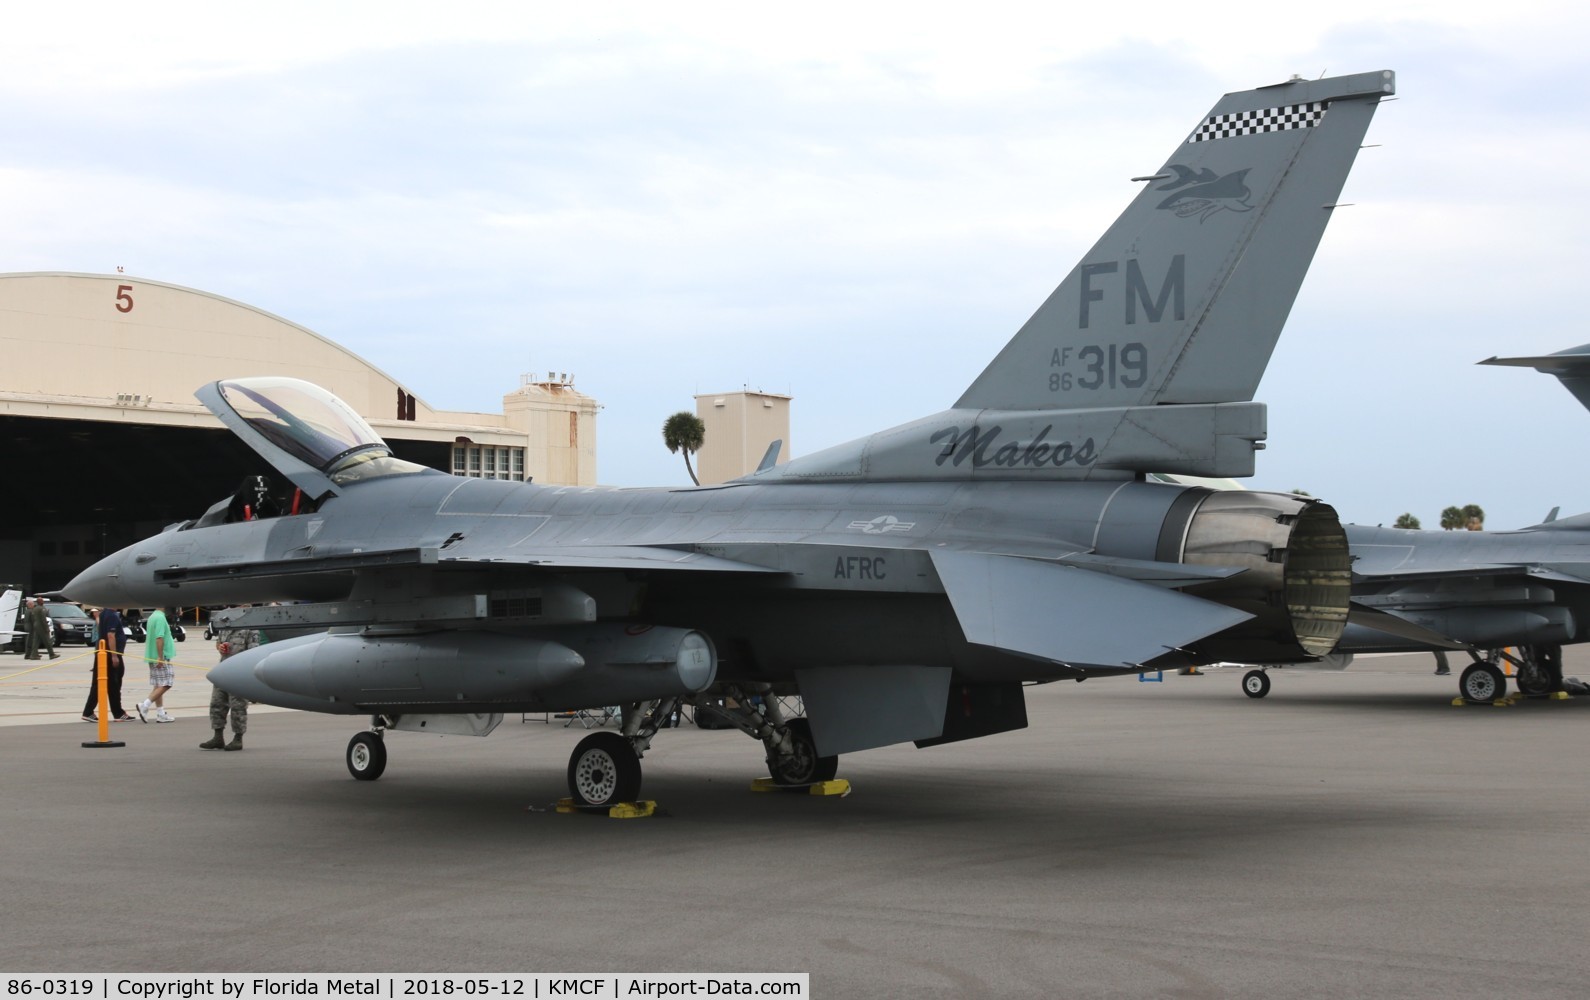 86-0319, 1986 General Dynamics F-16C Fighting Falcon C/N 5C-425, F-16C zx